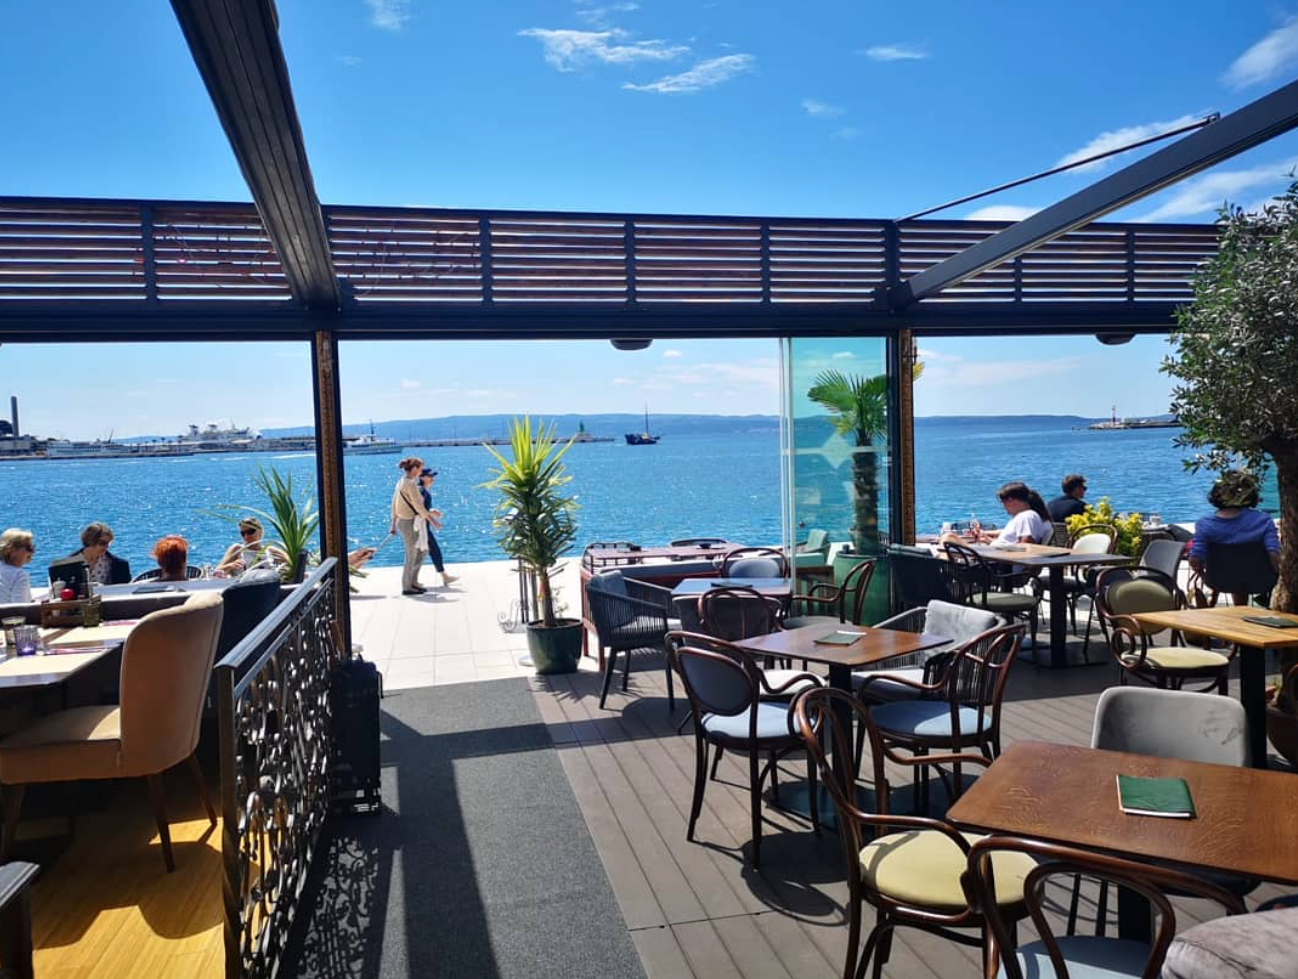 Basta - Restaurants with a view in Split